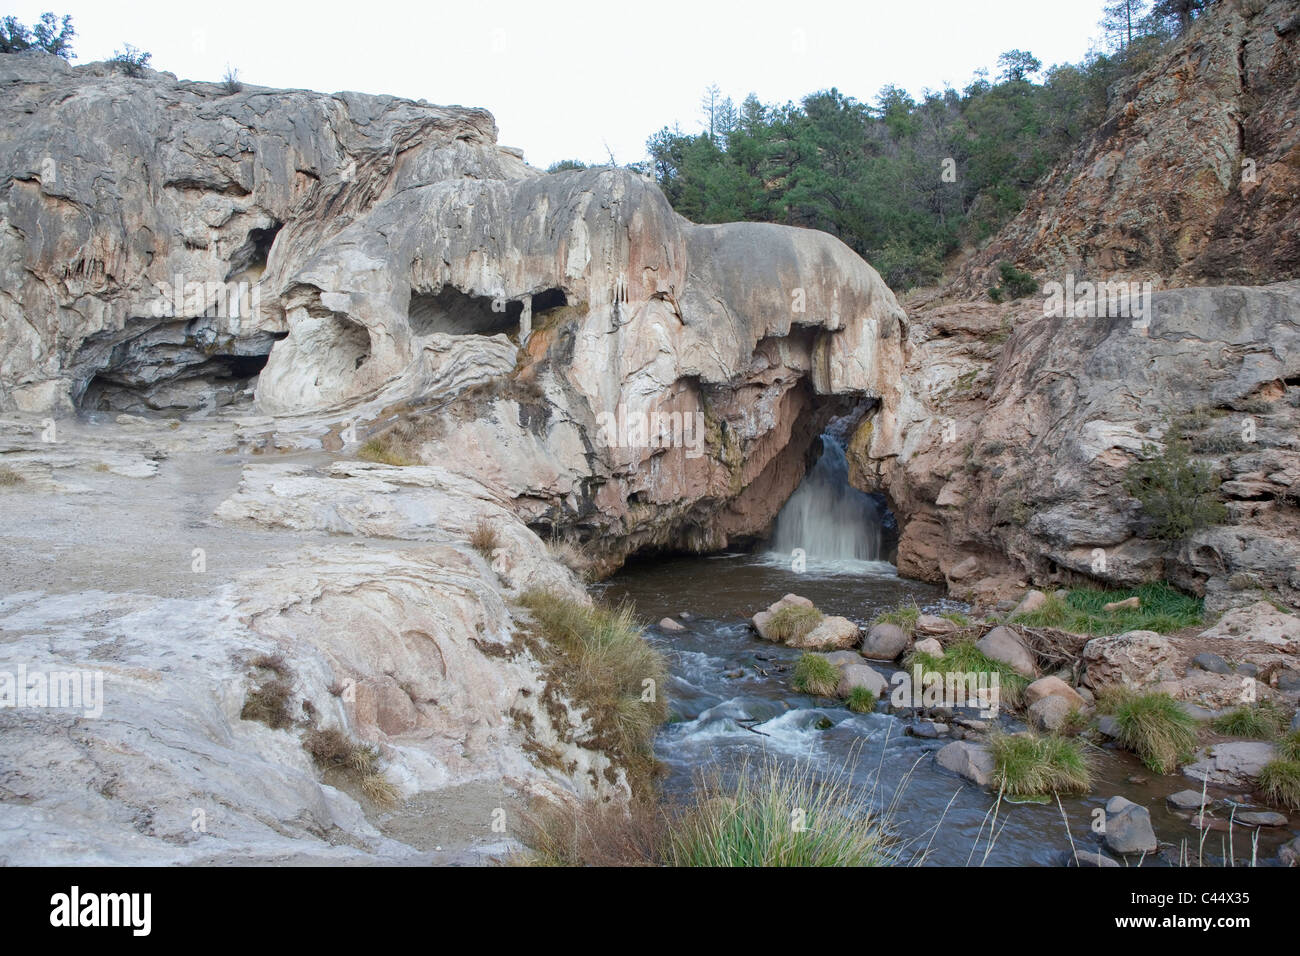 USA, New Mexico, Santa Fe, Soda Dam, Natural dam blocking Jemez River Stock Photo